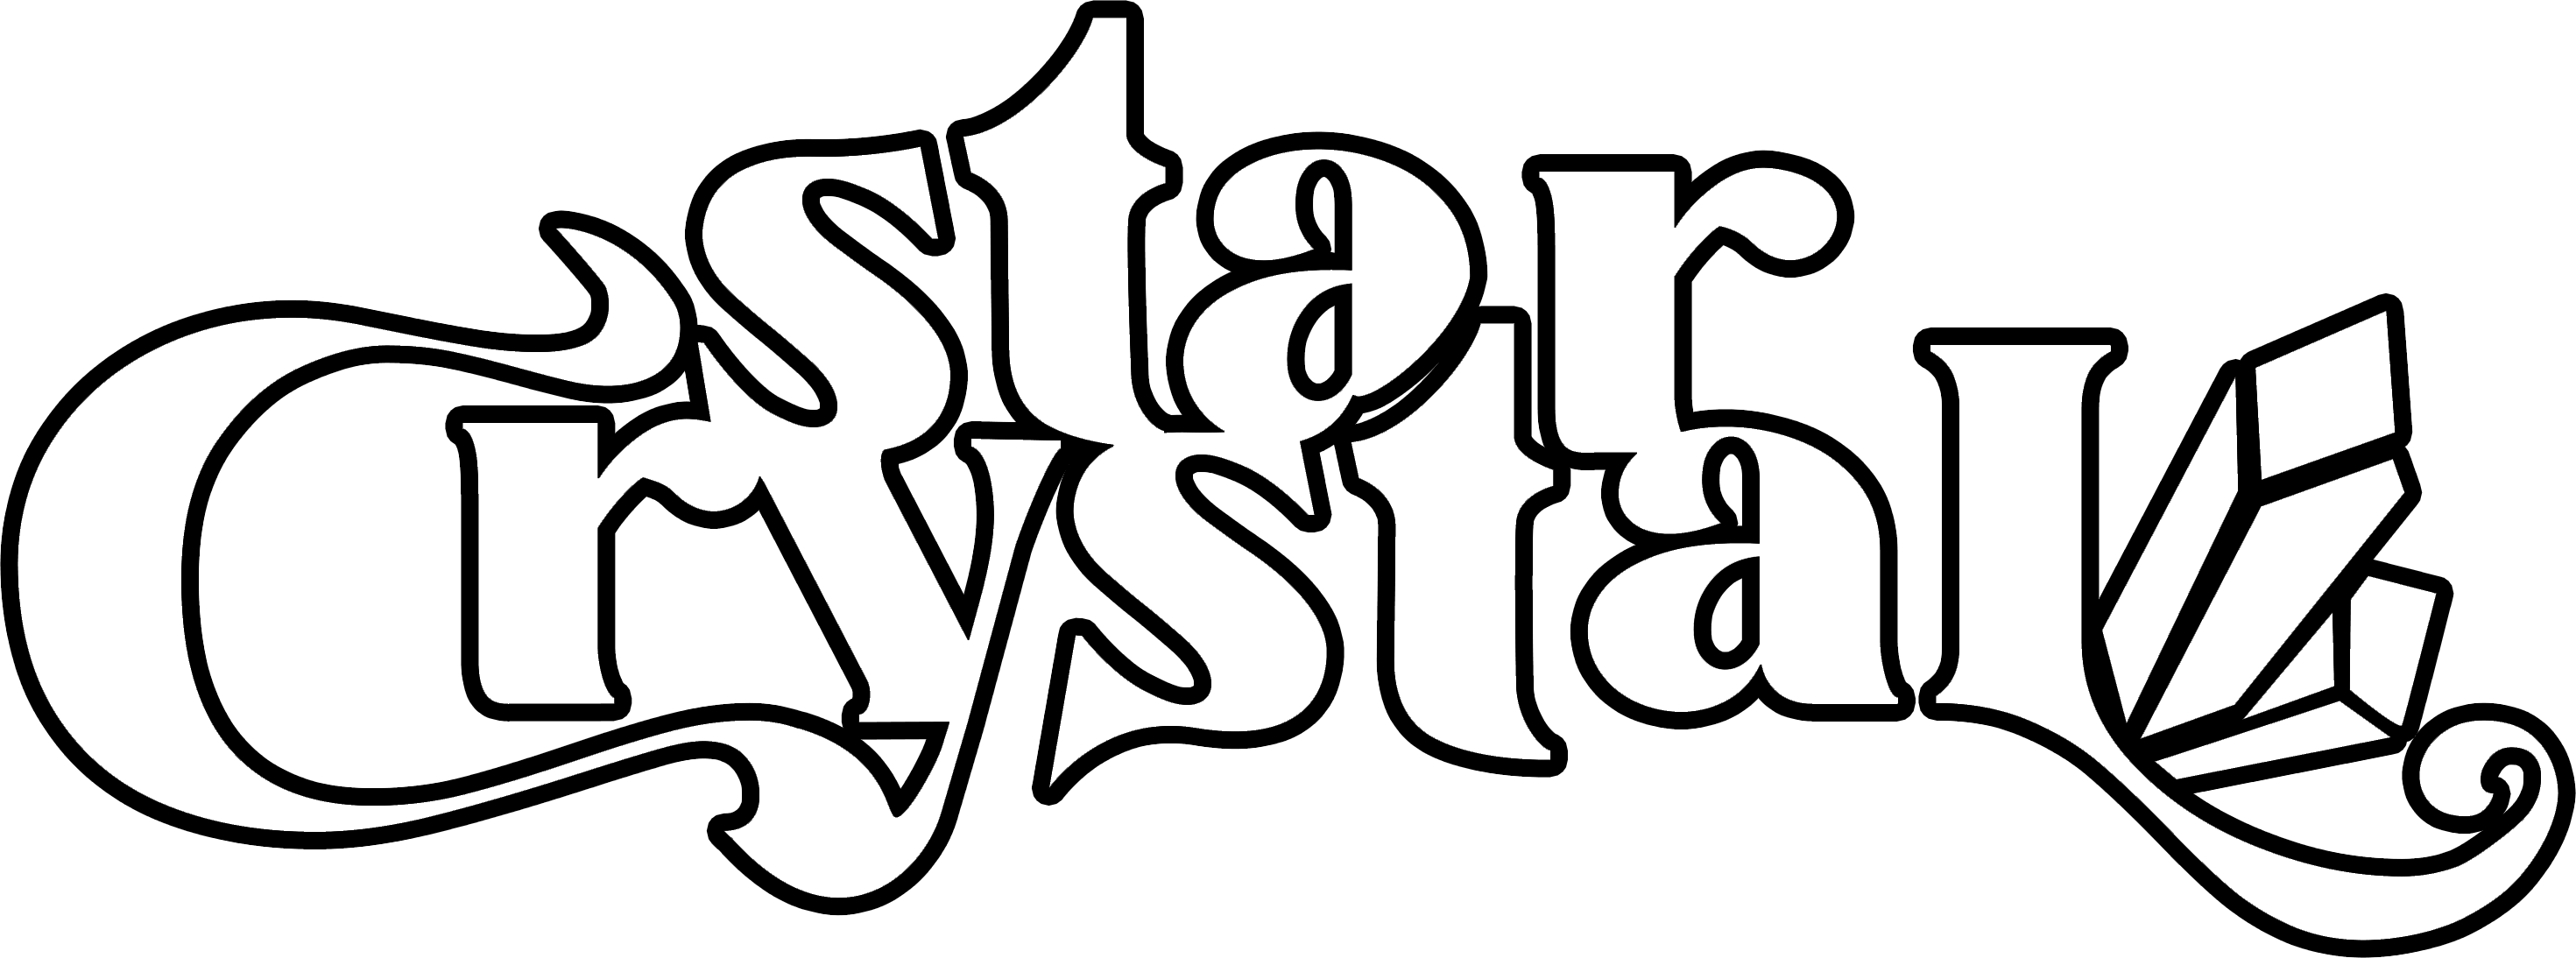 Star Crystal logo